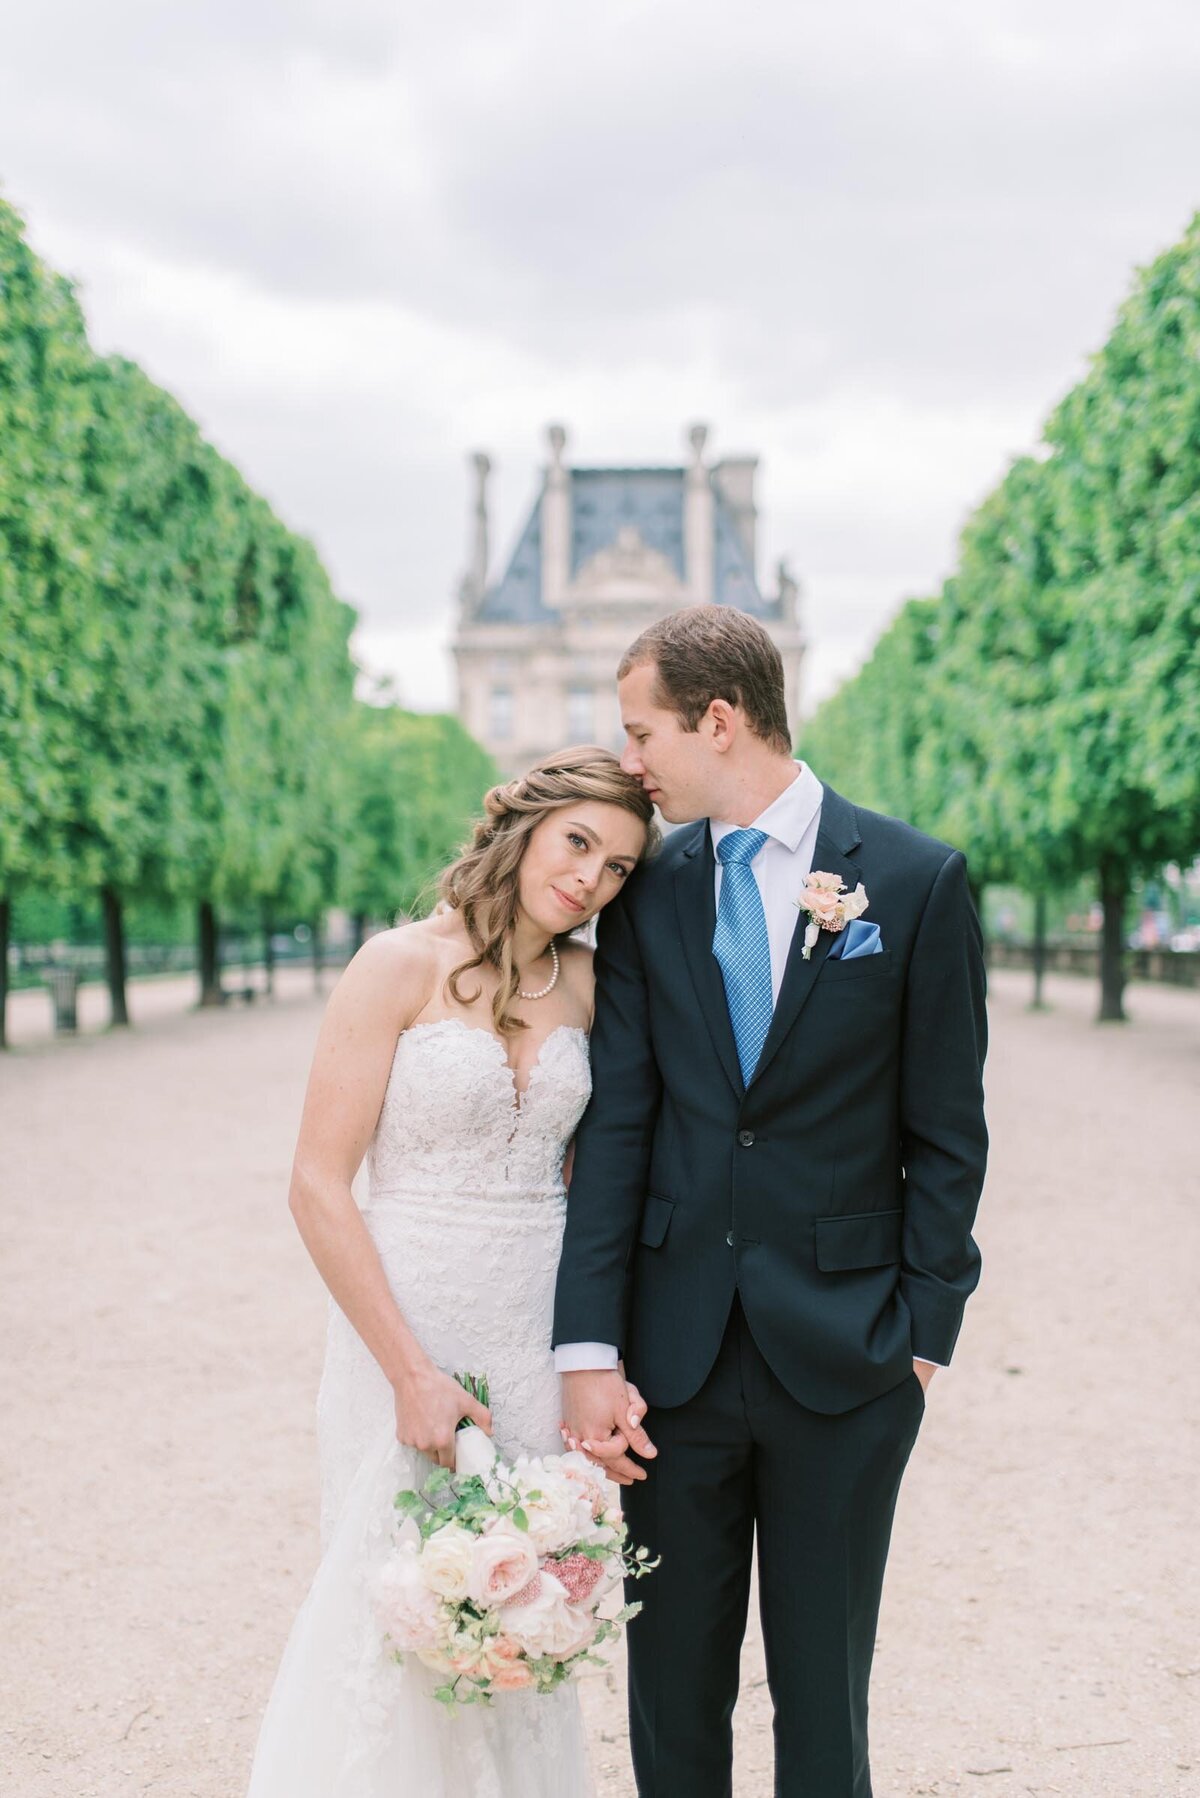 marcelaploskerphotography-paris_wedding-61